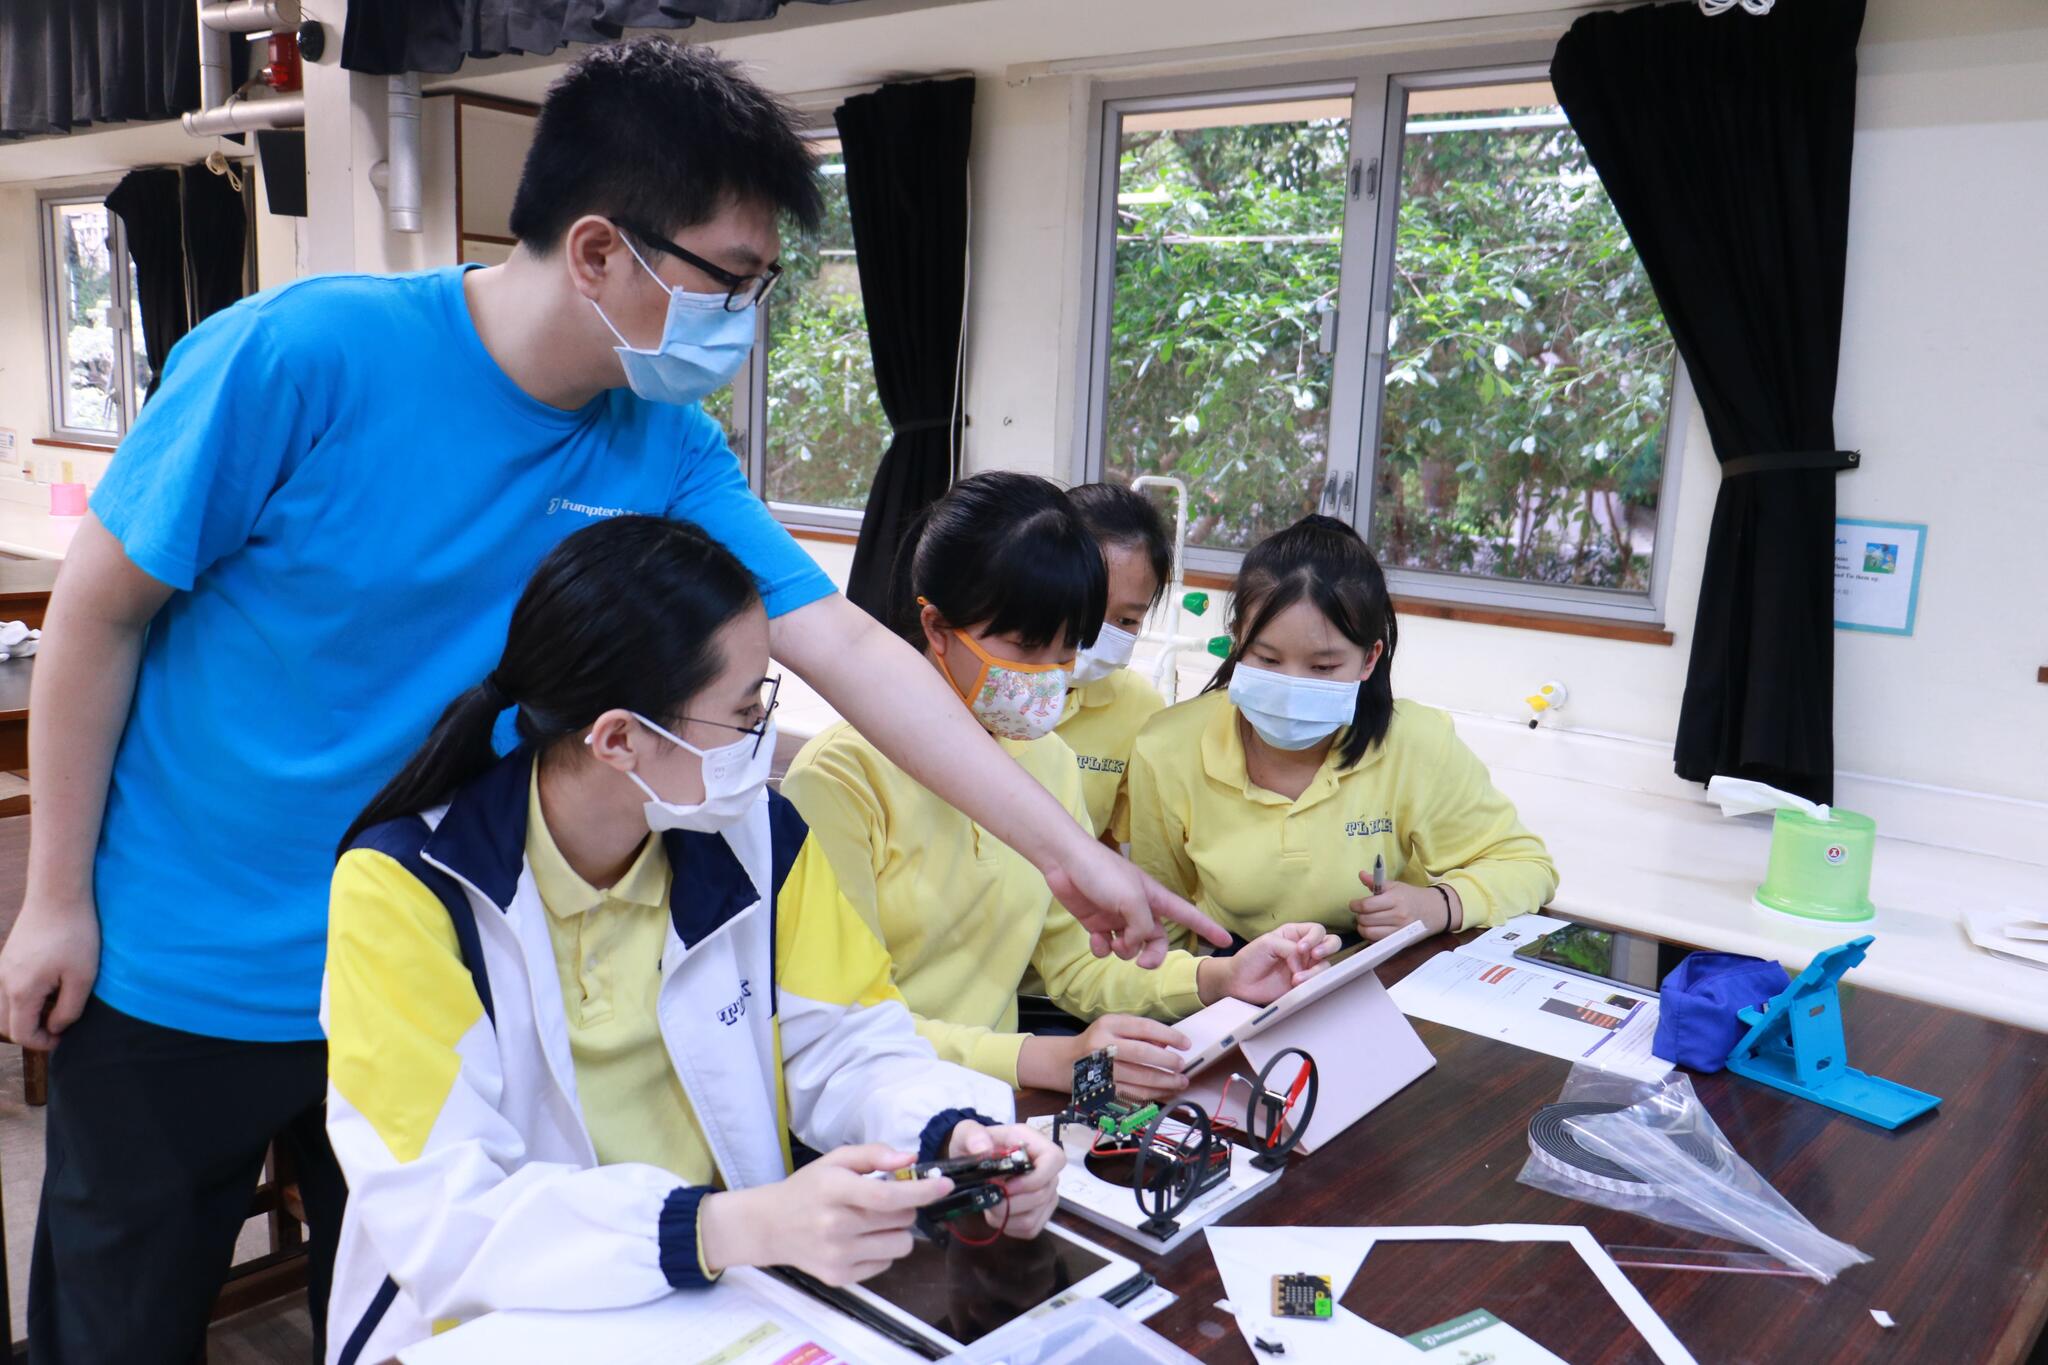 Hovercraft Fun Day - True Light Middle School of Hong Kong